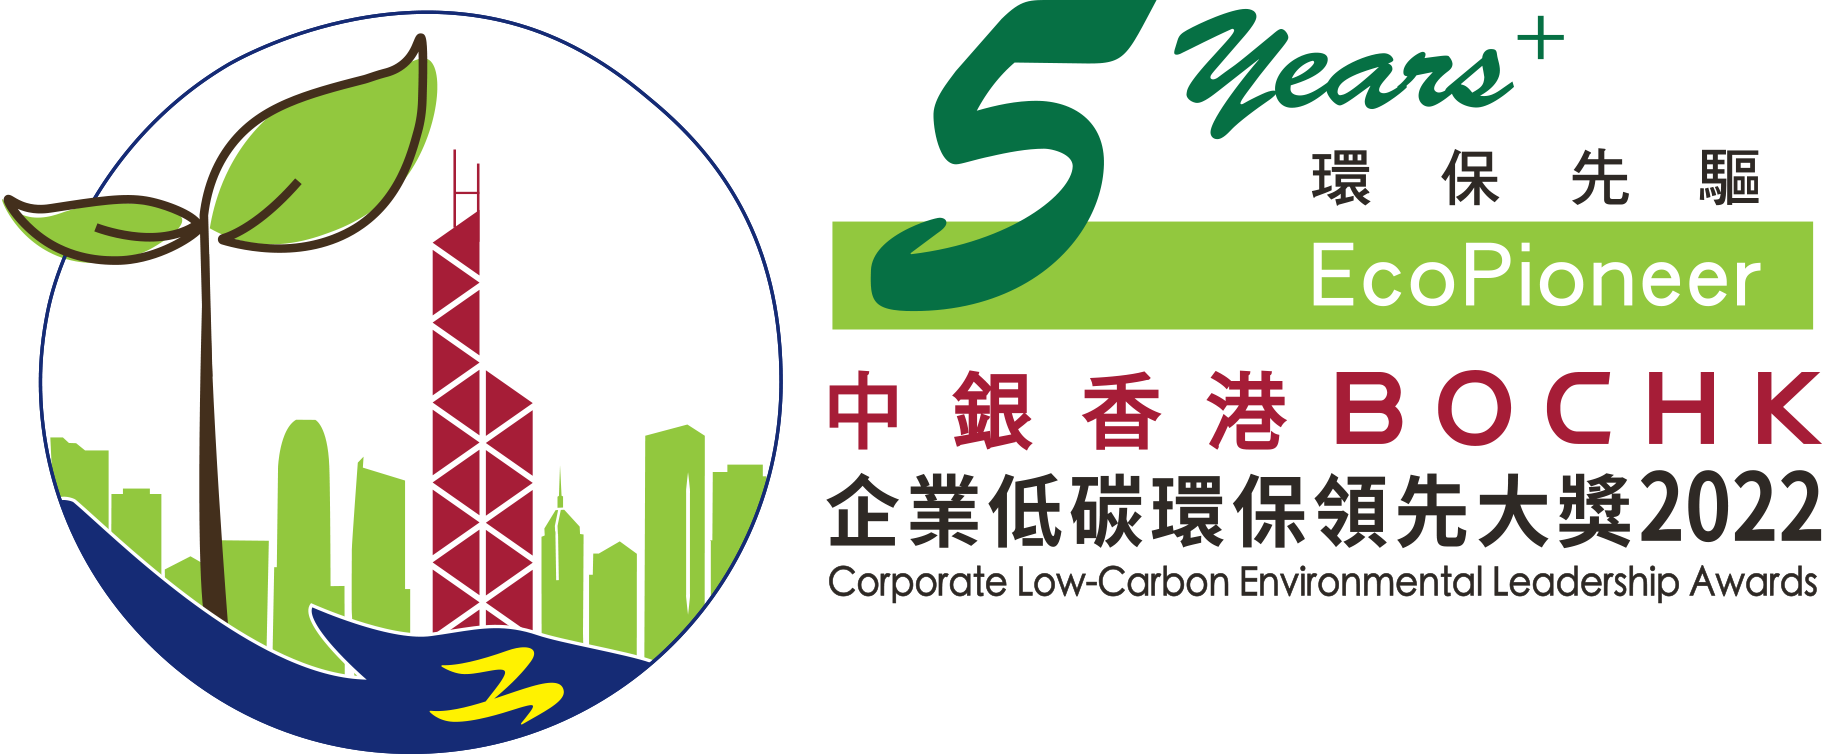 BOCHK Corporate Environmental Leadership Award-EcoPioneer 中銀香港企業環保領先大獎-環保先驅